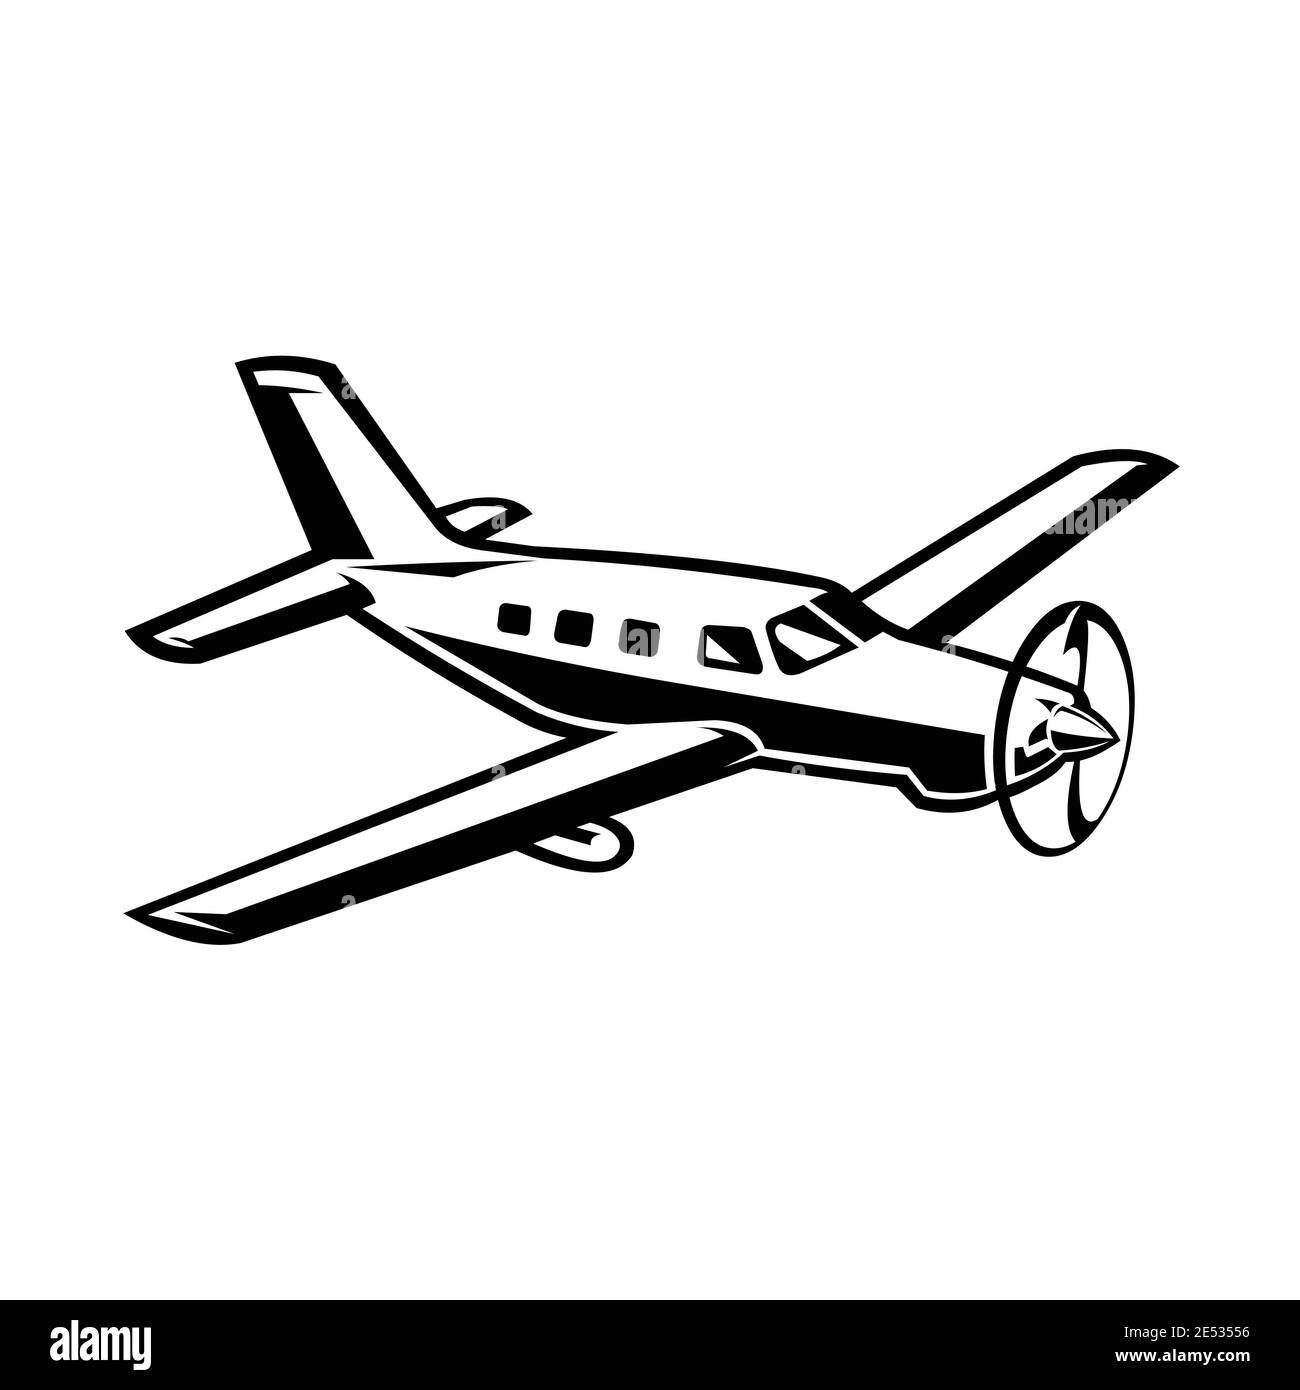 Avioneta avioneta Imágenes recortadas de stock - Alamy